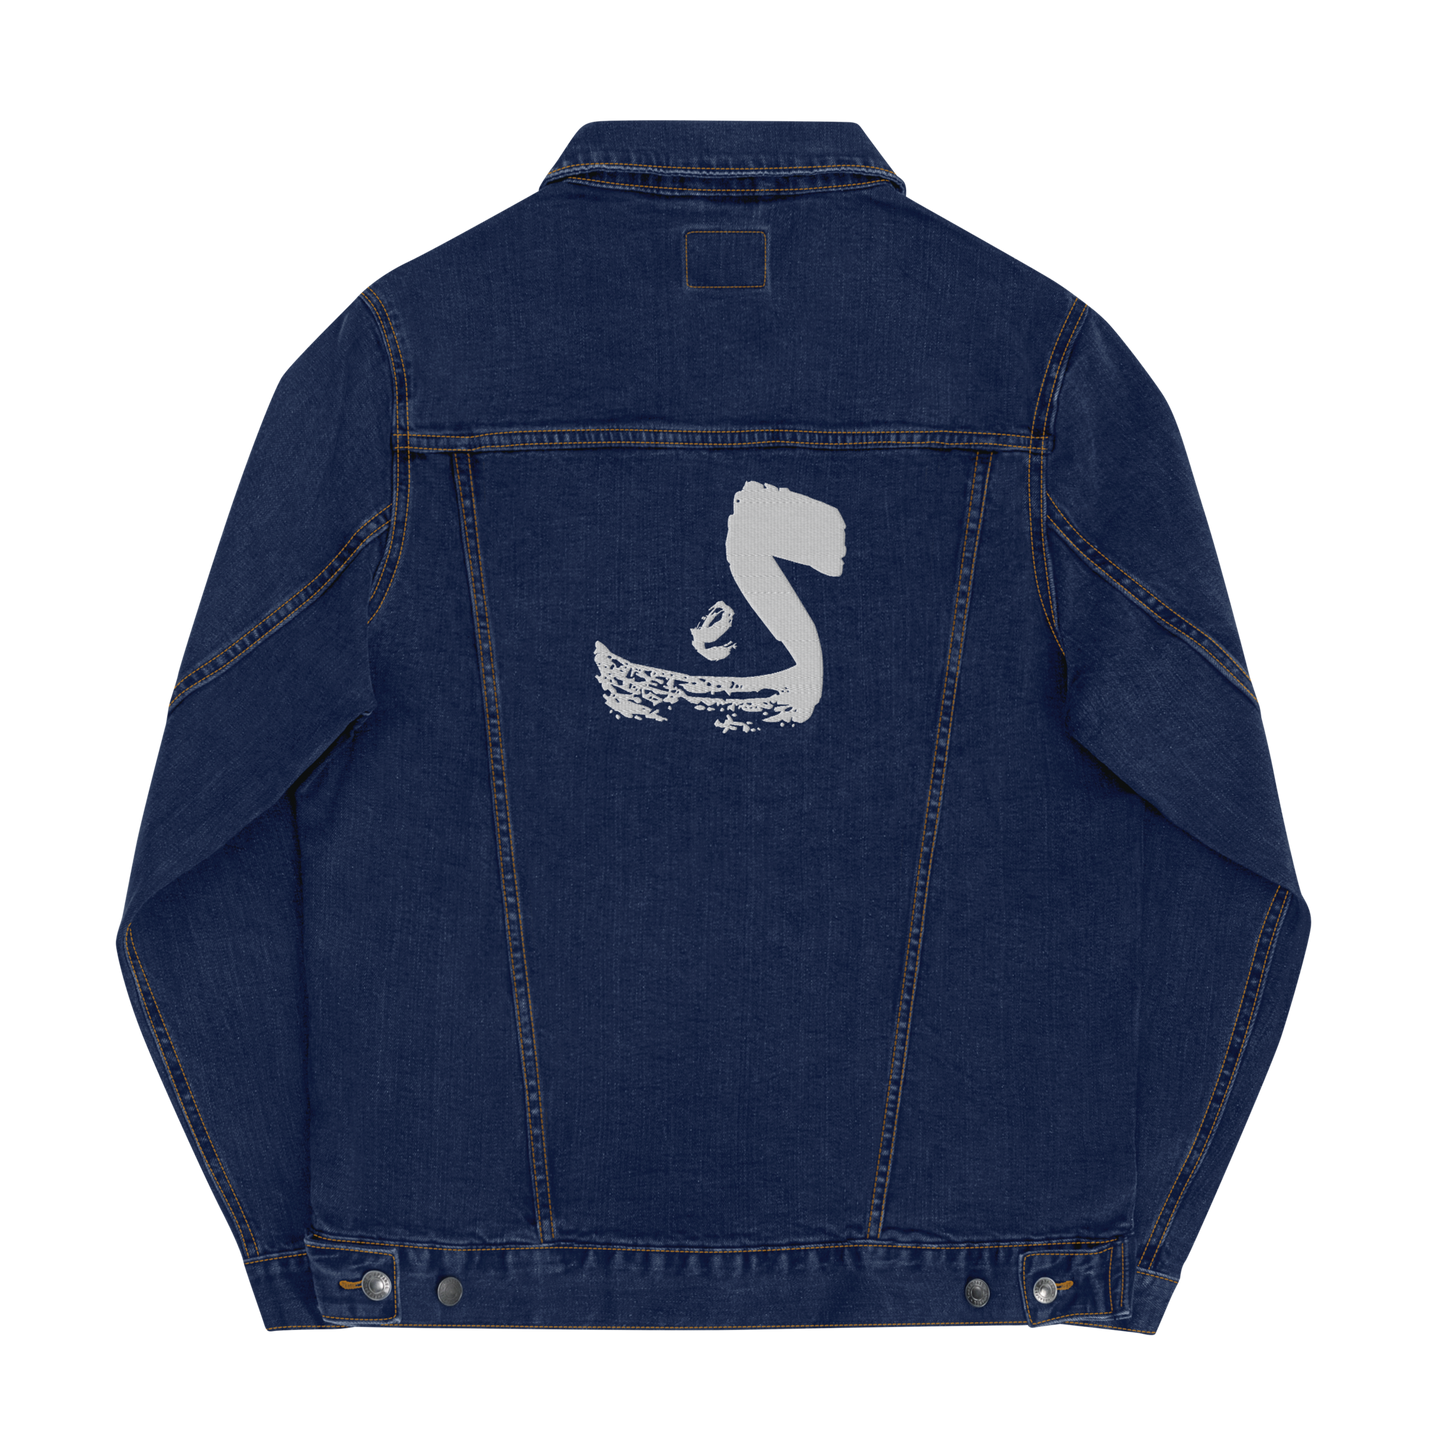 Early Sixteenz Embroidered Denim Jacket